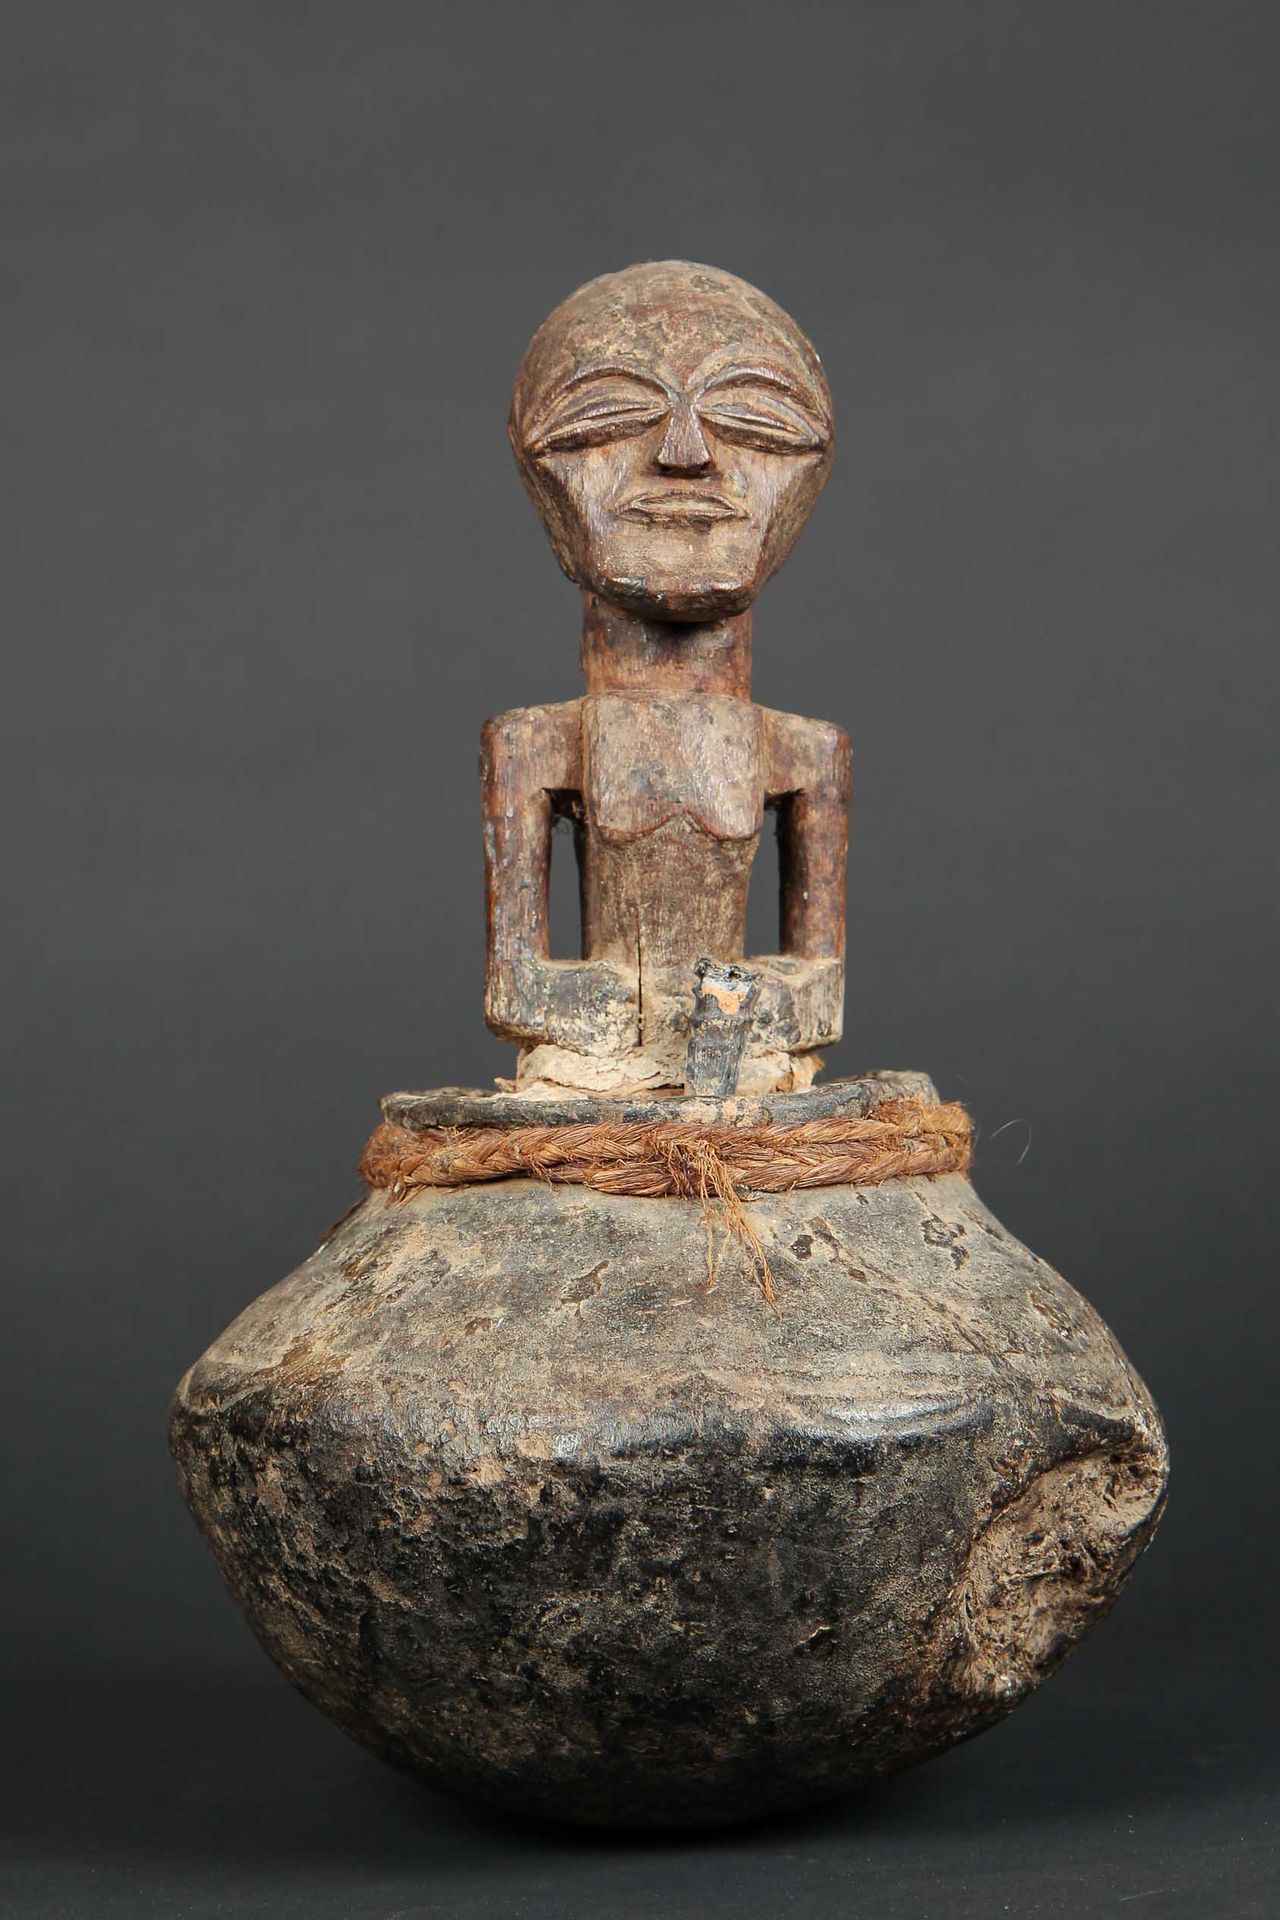 Null 用木头、赤土、植物纤维和各种预防材料制成的占卜壶。它呈现了一个具有美丽保护表情的祖先形象。松耶，刚果民主共和国，20世纪。高：33厘米。出处：前私人收&hellip;